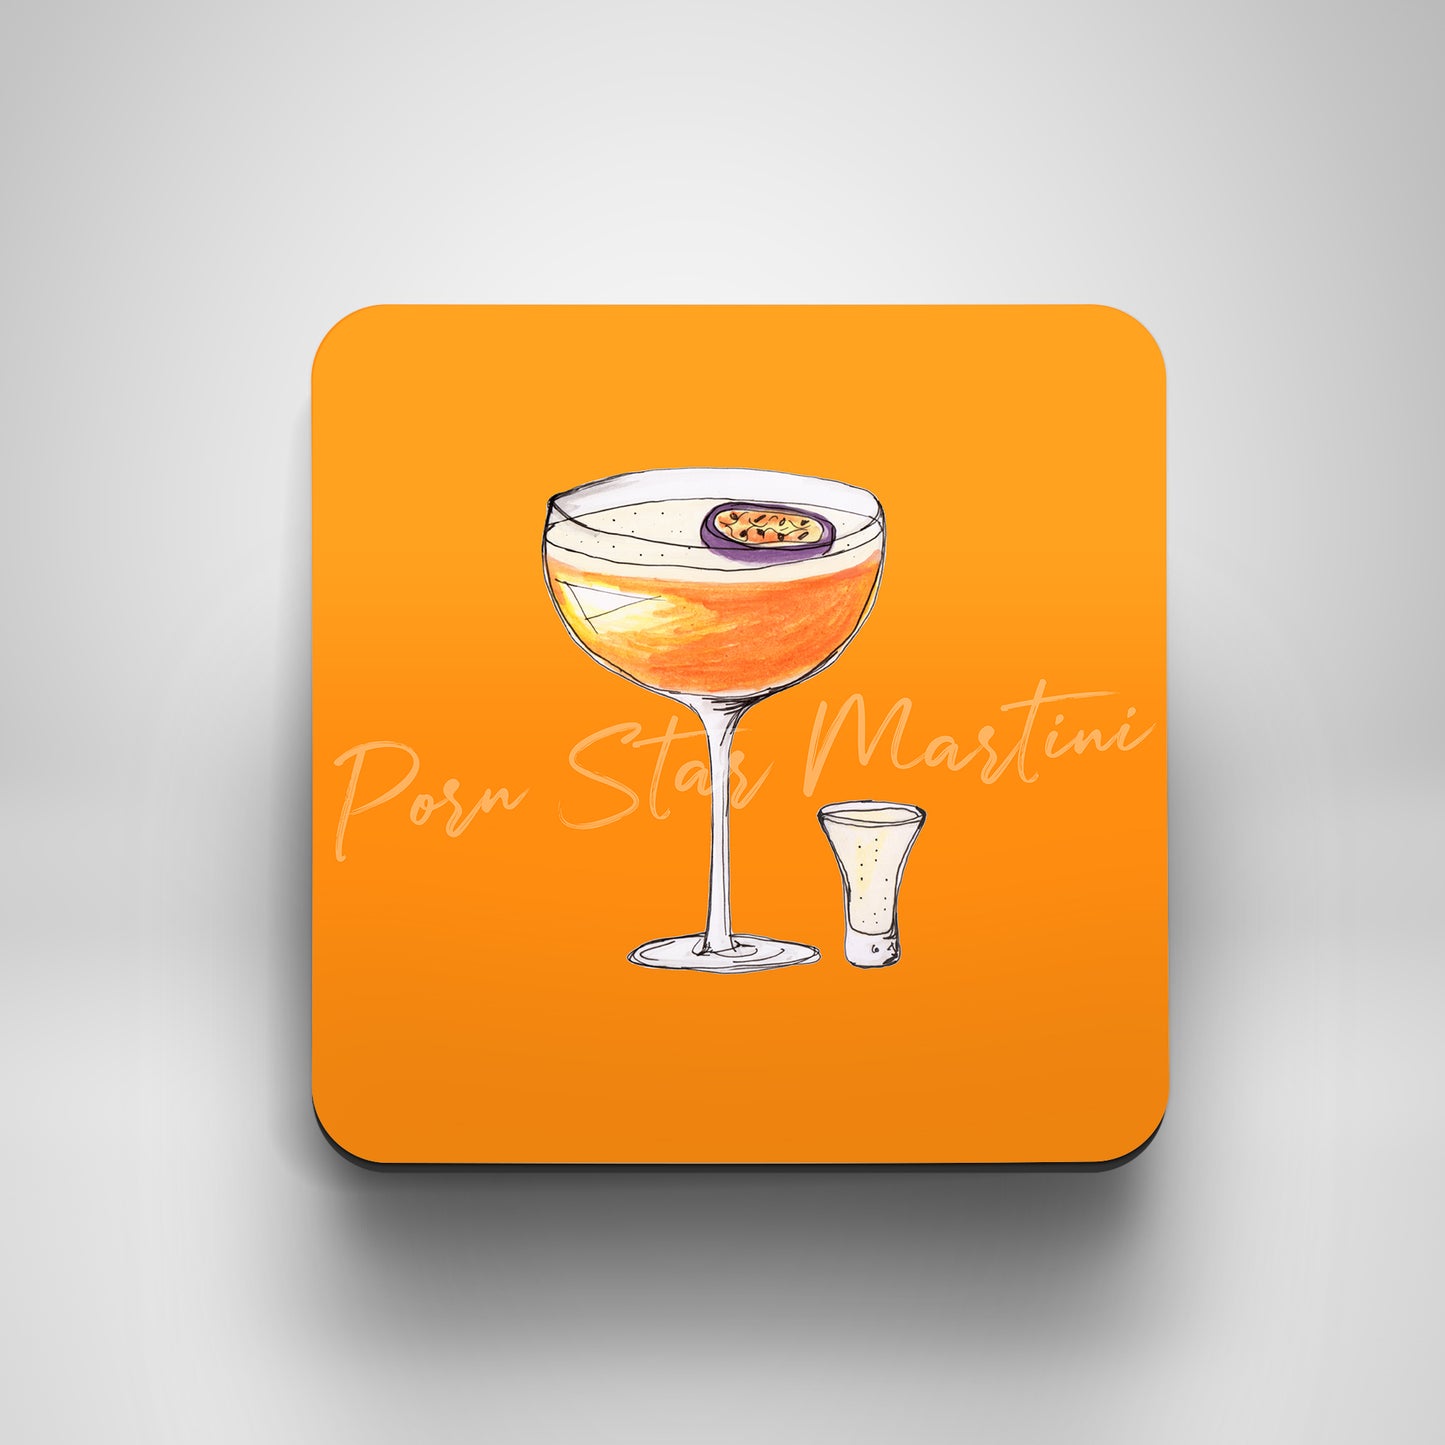 Porn star martini illustrated drinks coaster